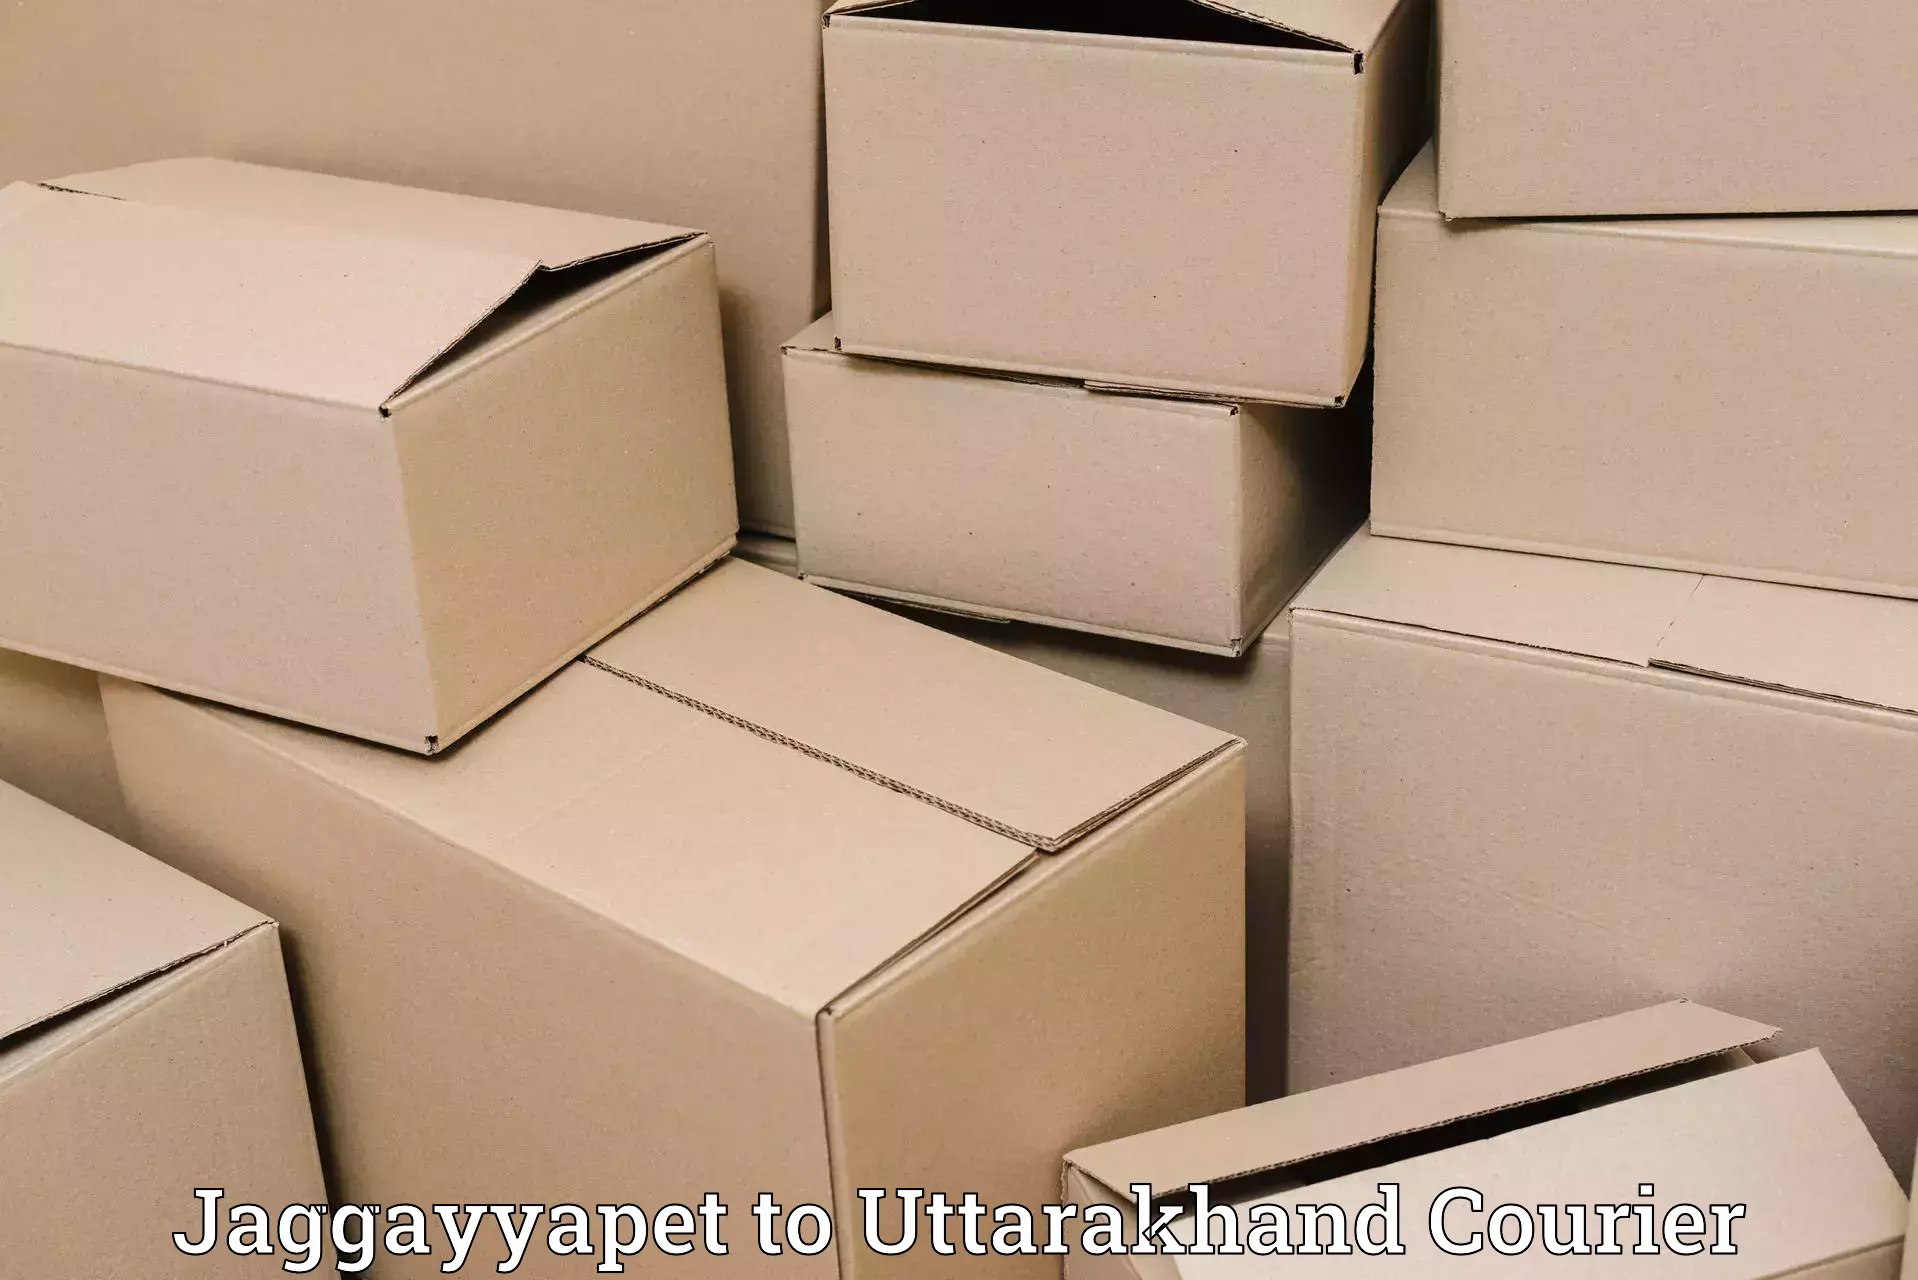 Global logistics network Jaggayyapet to Uttarakhand